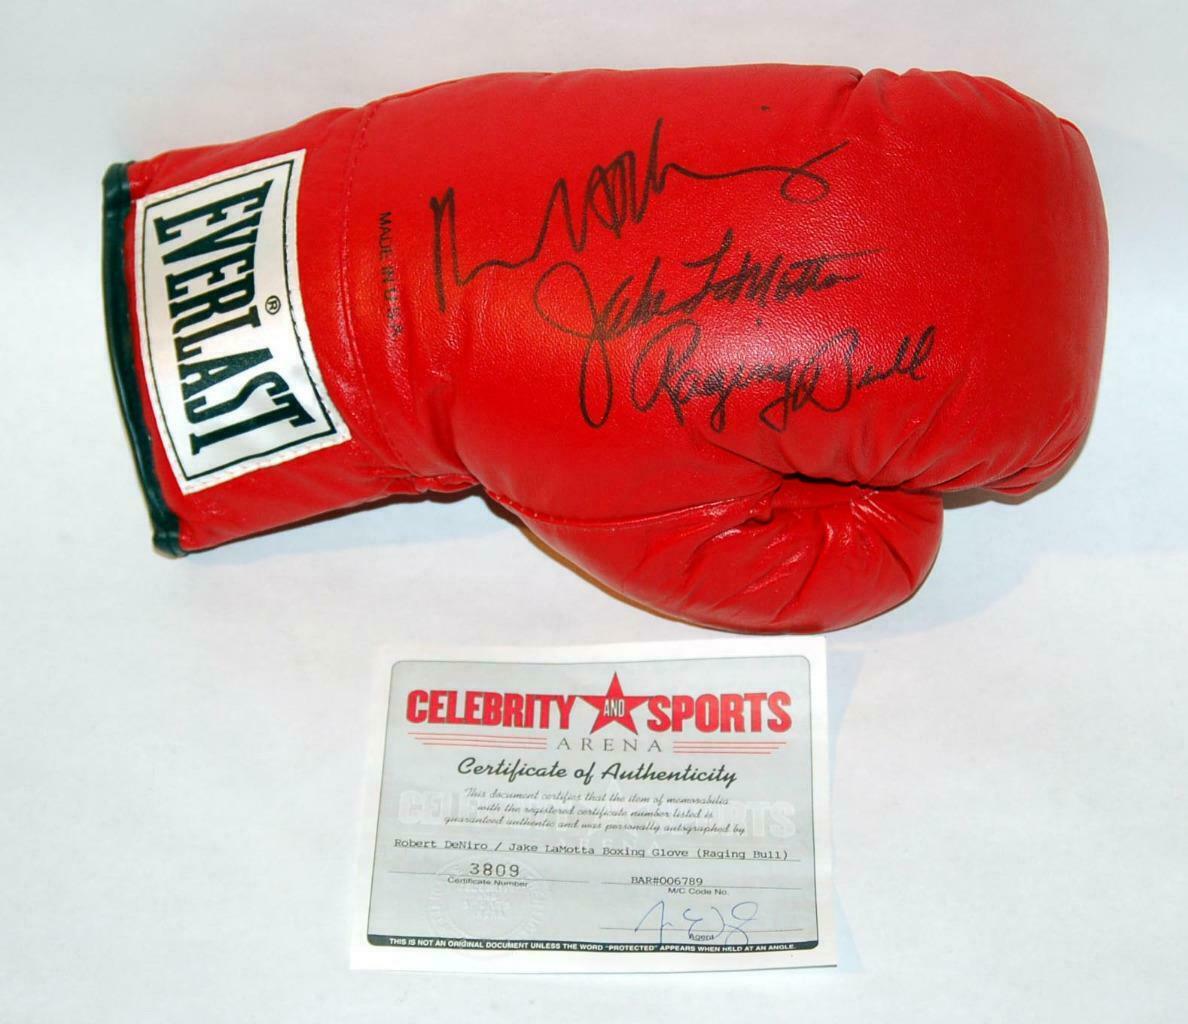 Robert De Niro & Jake Lamotta Raging Bull Authentic Autographed Boxing Glove Coa